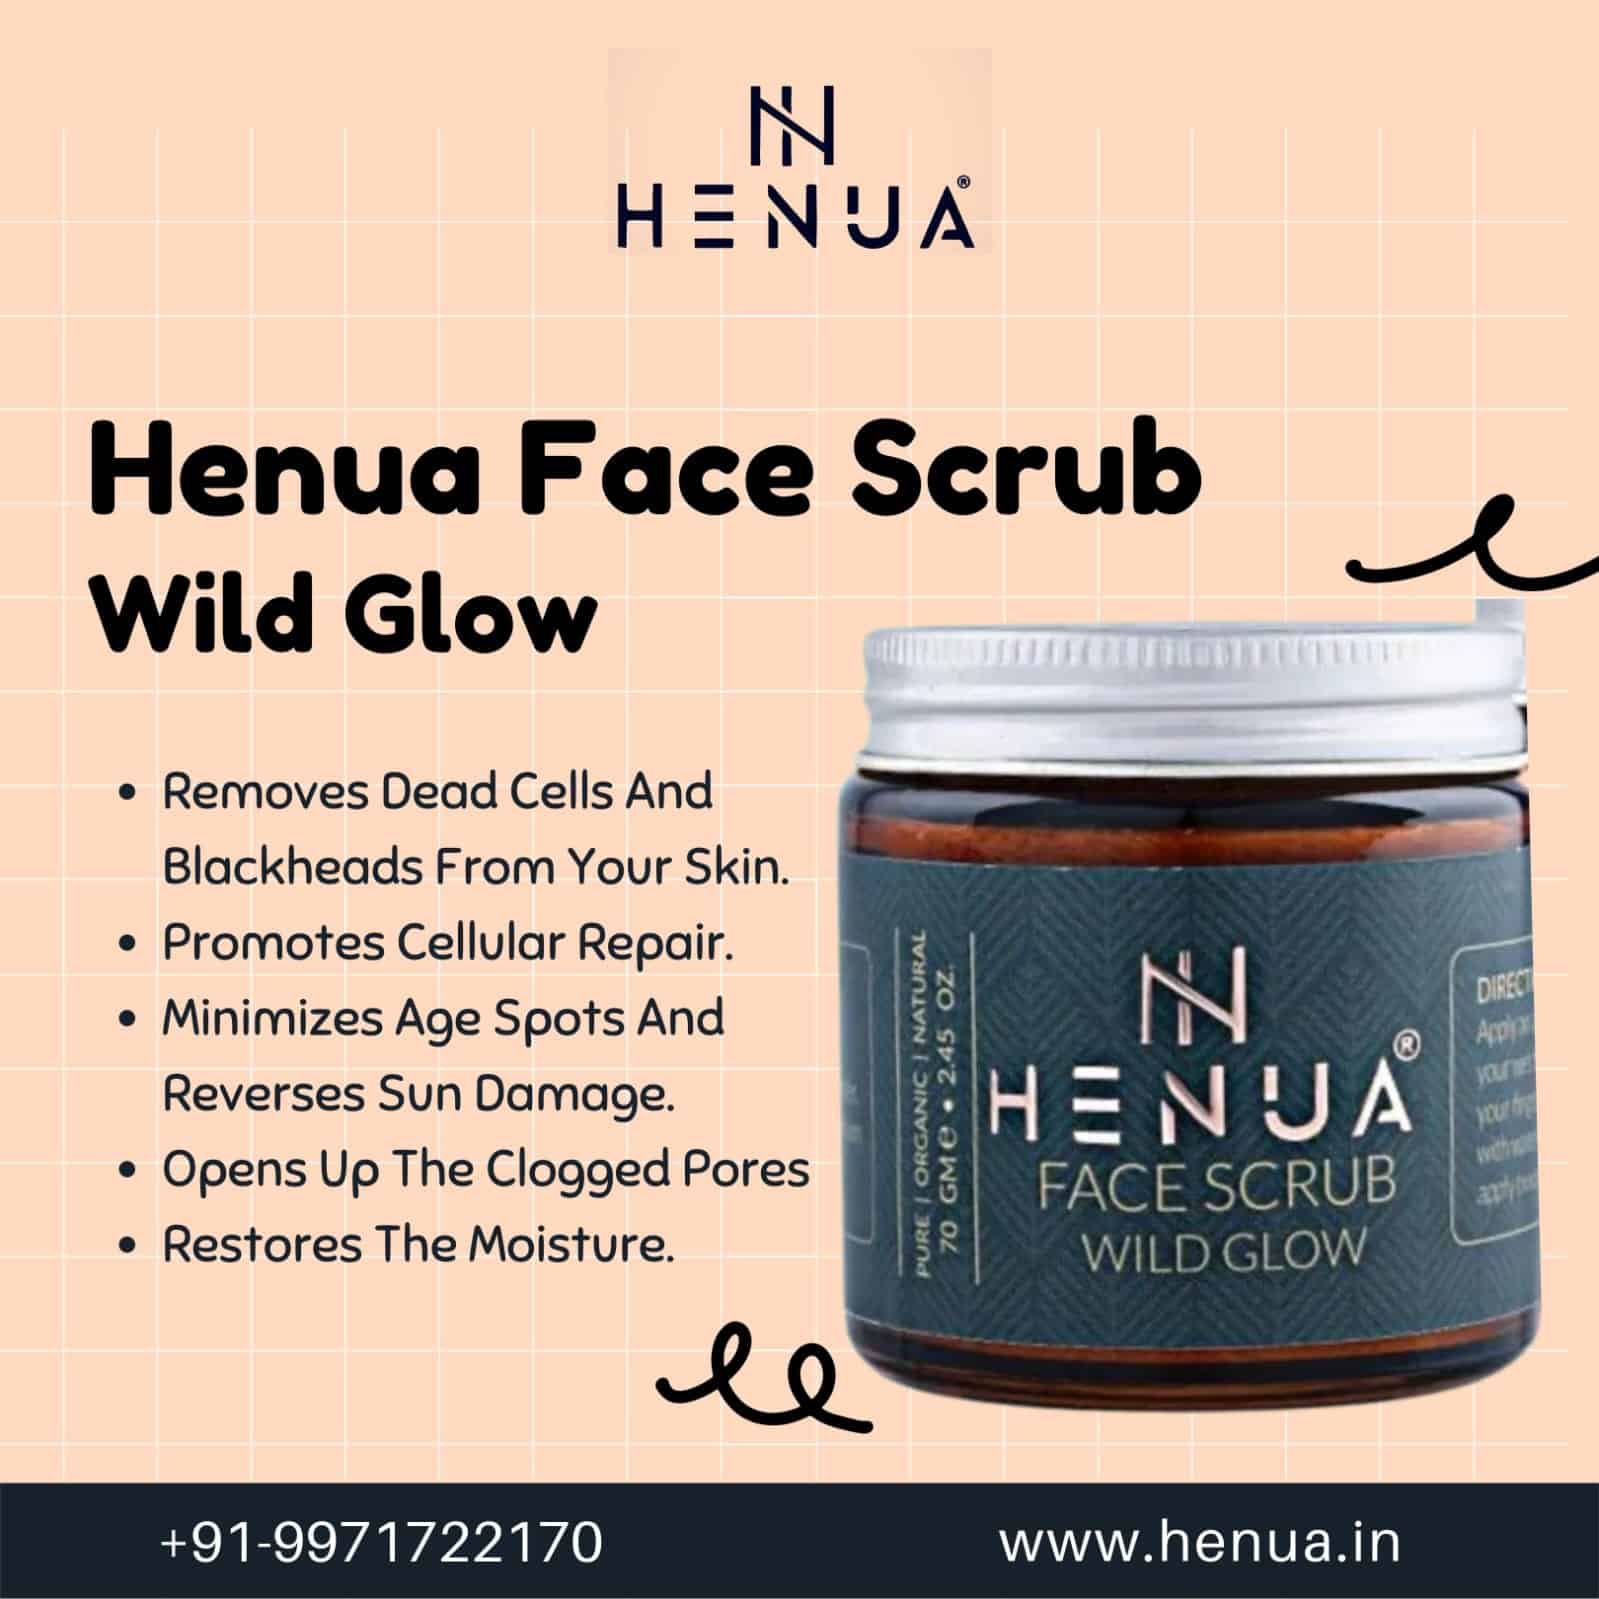 With-Henua-Face-Scrub-Exfoliate-Your-Skin-Naturally